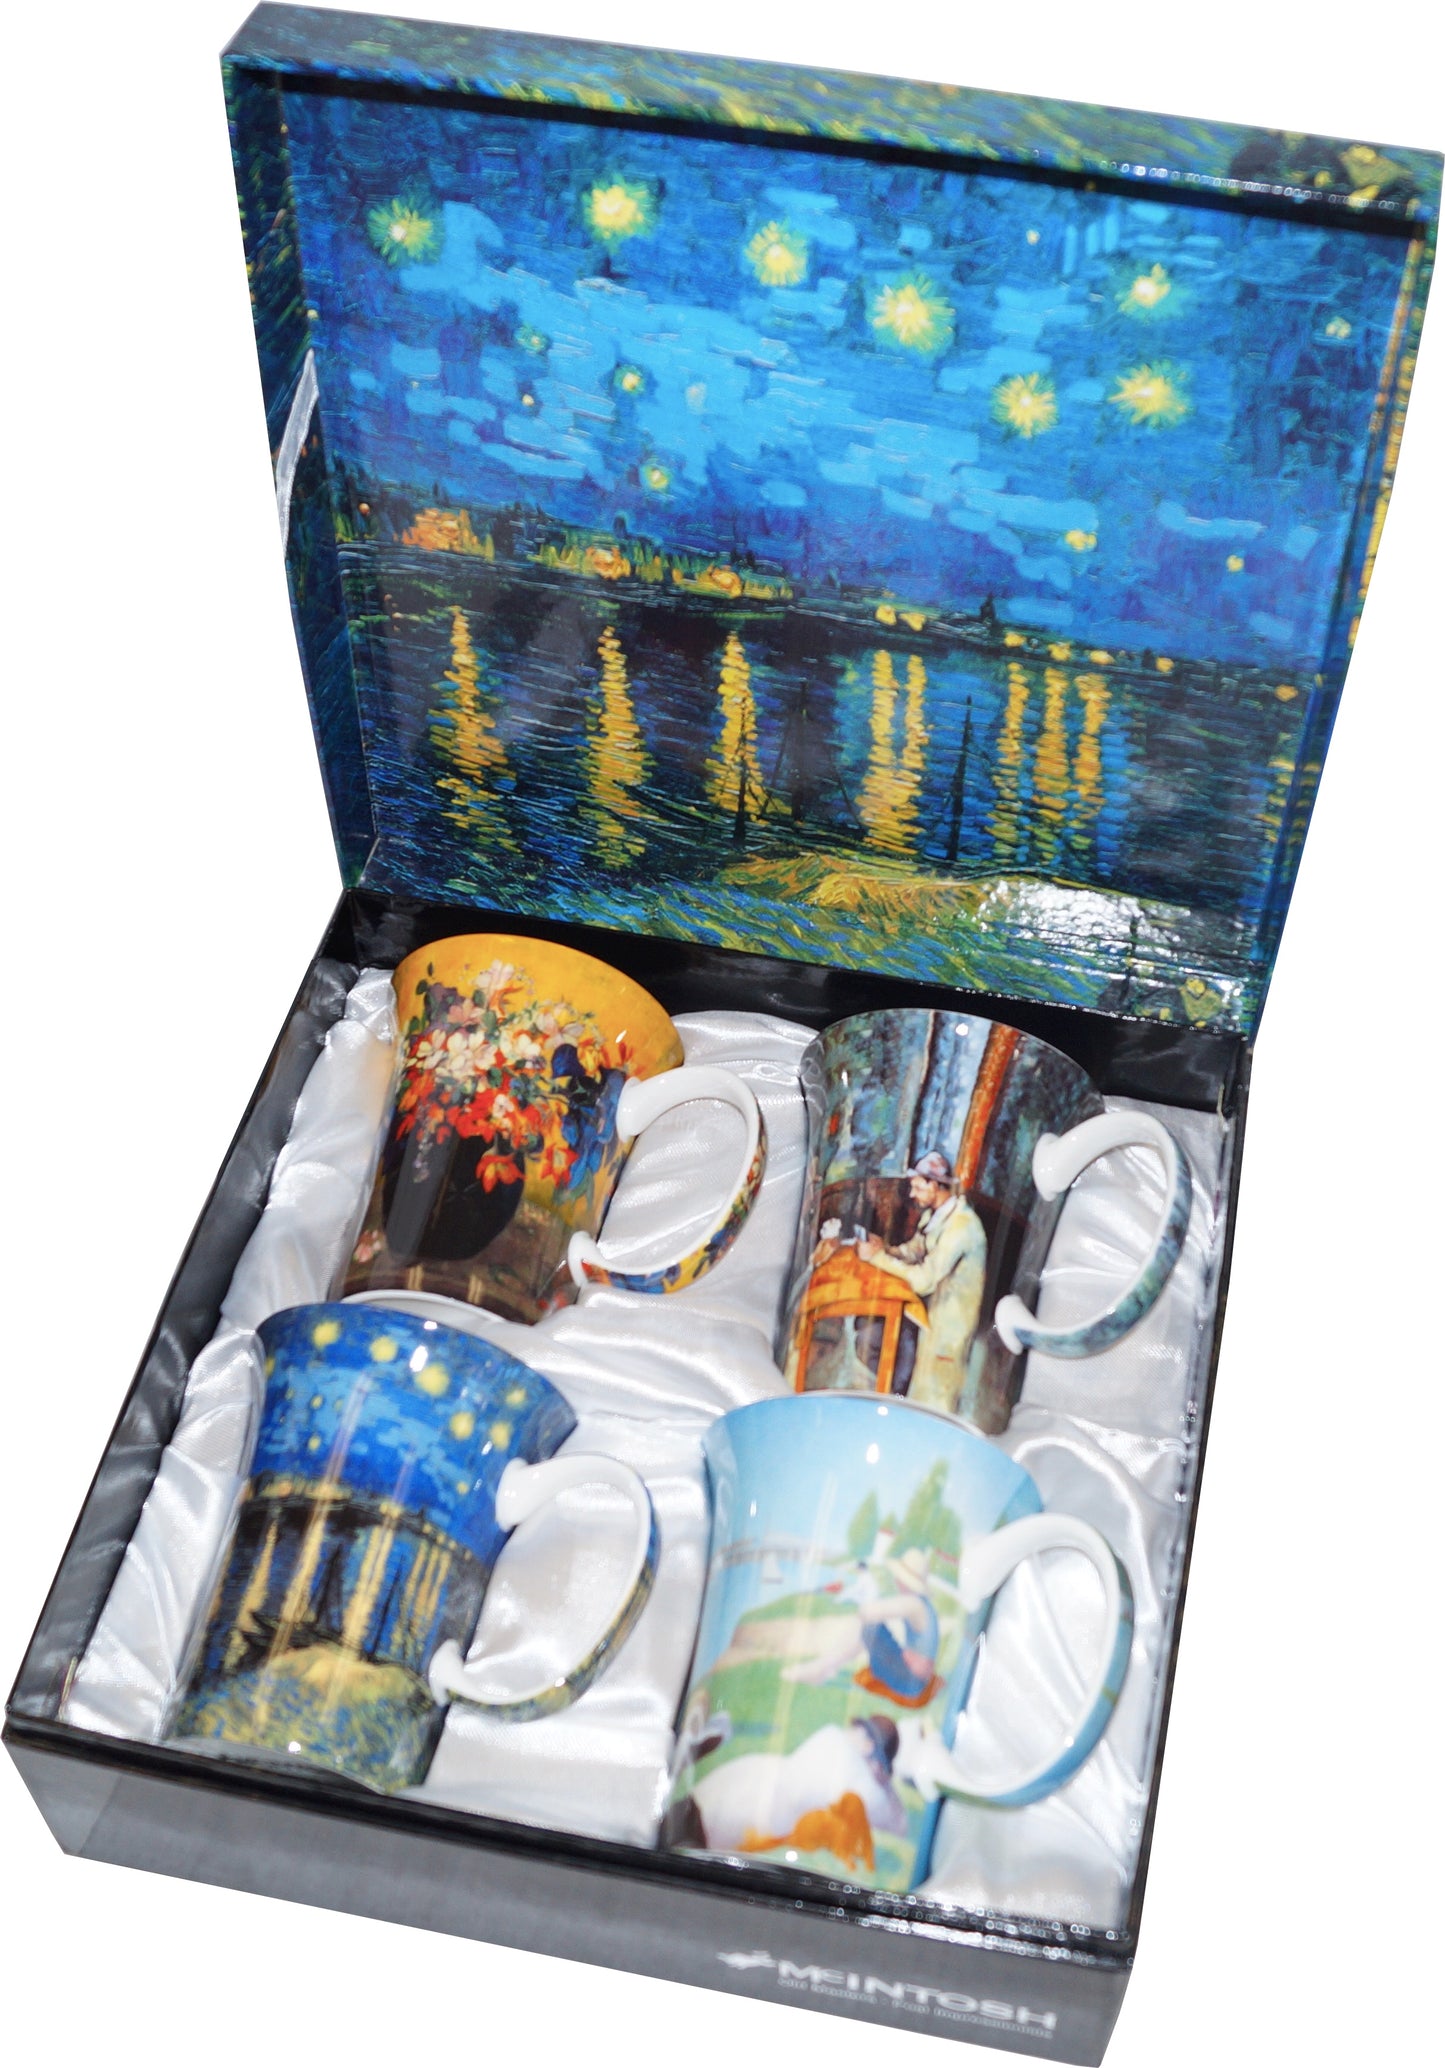 Post-Impressionists Set of 4 Mugs